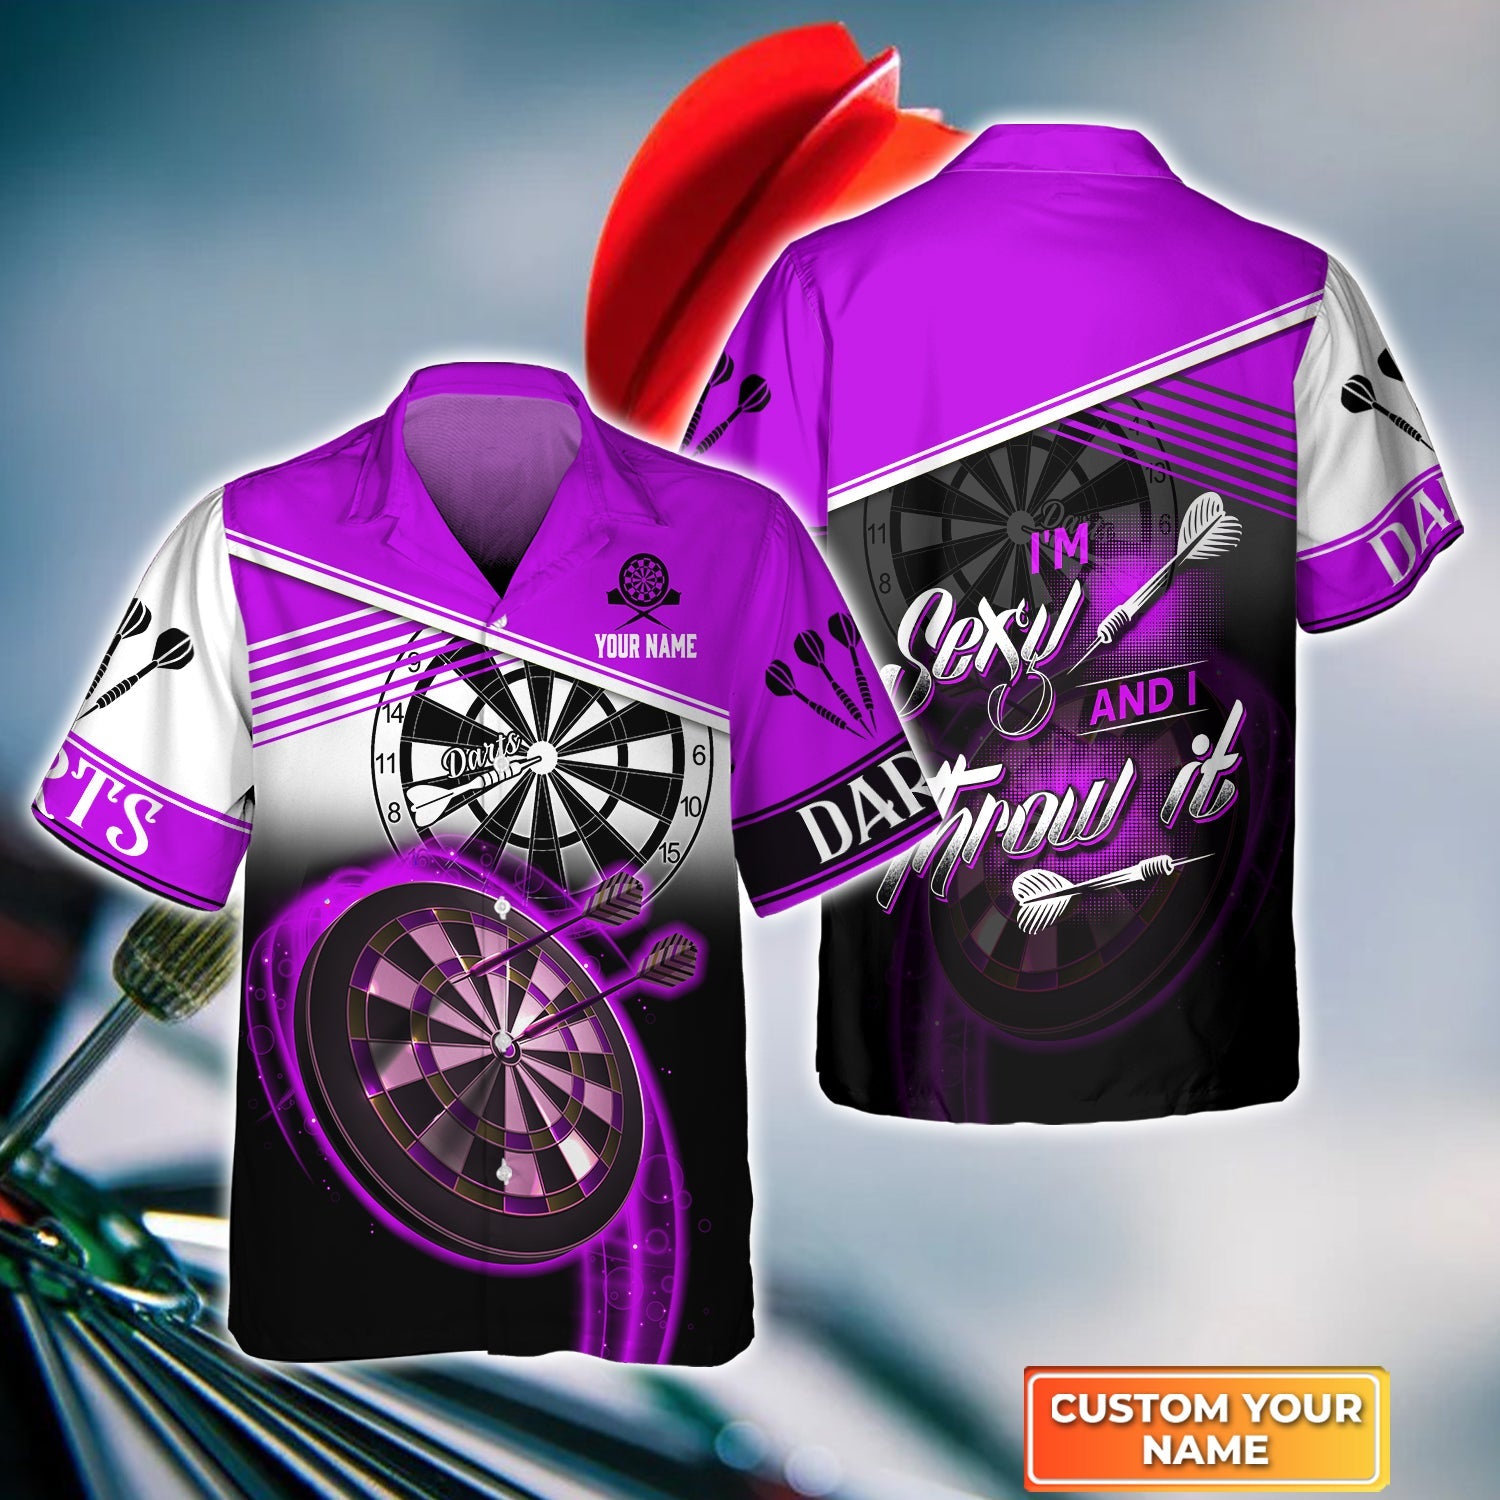 Customized Darts Hawaiian Shirt, I'm Sexy And I Throw It Purple Darts Personalized Aloha Shirt For Men - Perfect Gift For Darts Lovers, Darts Players